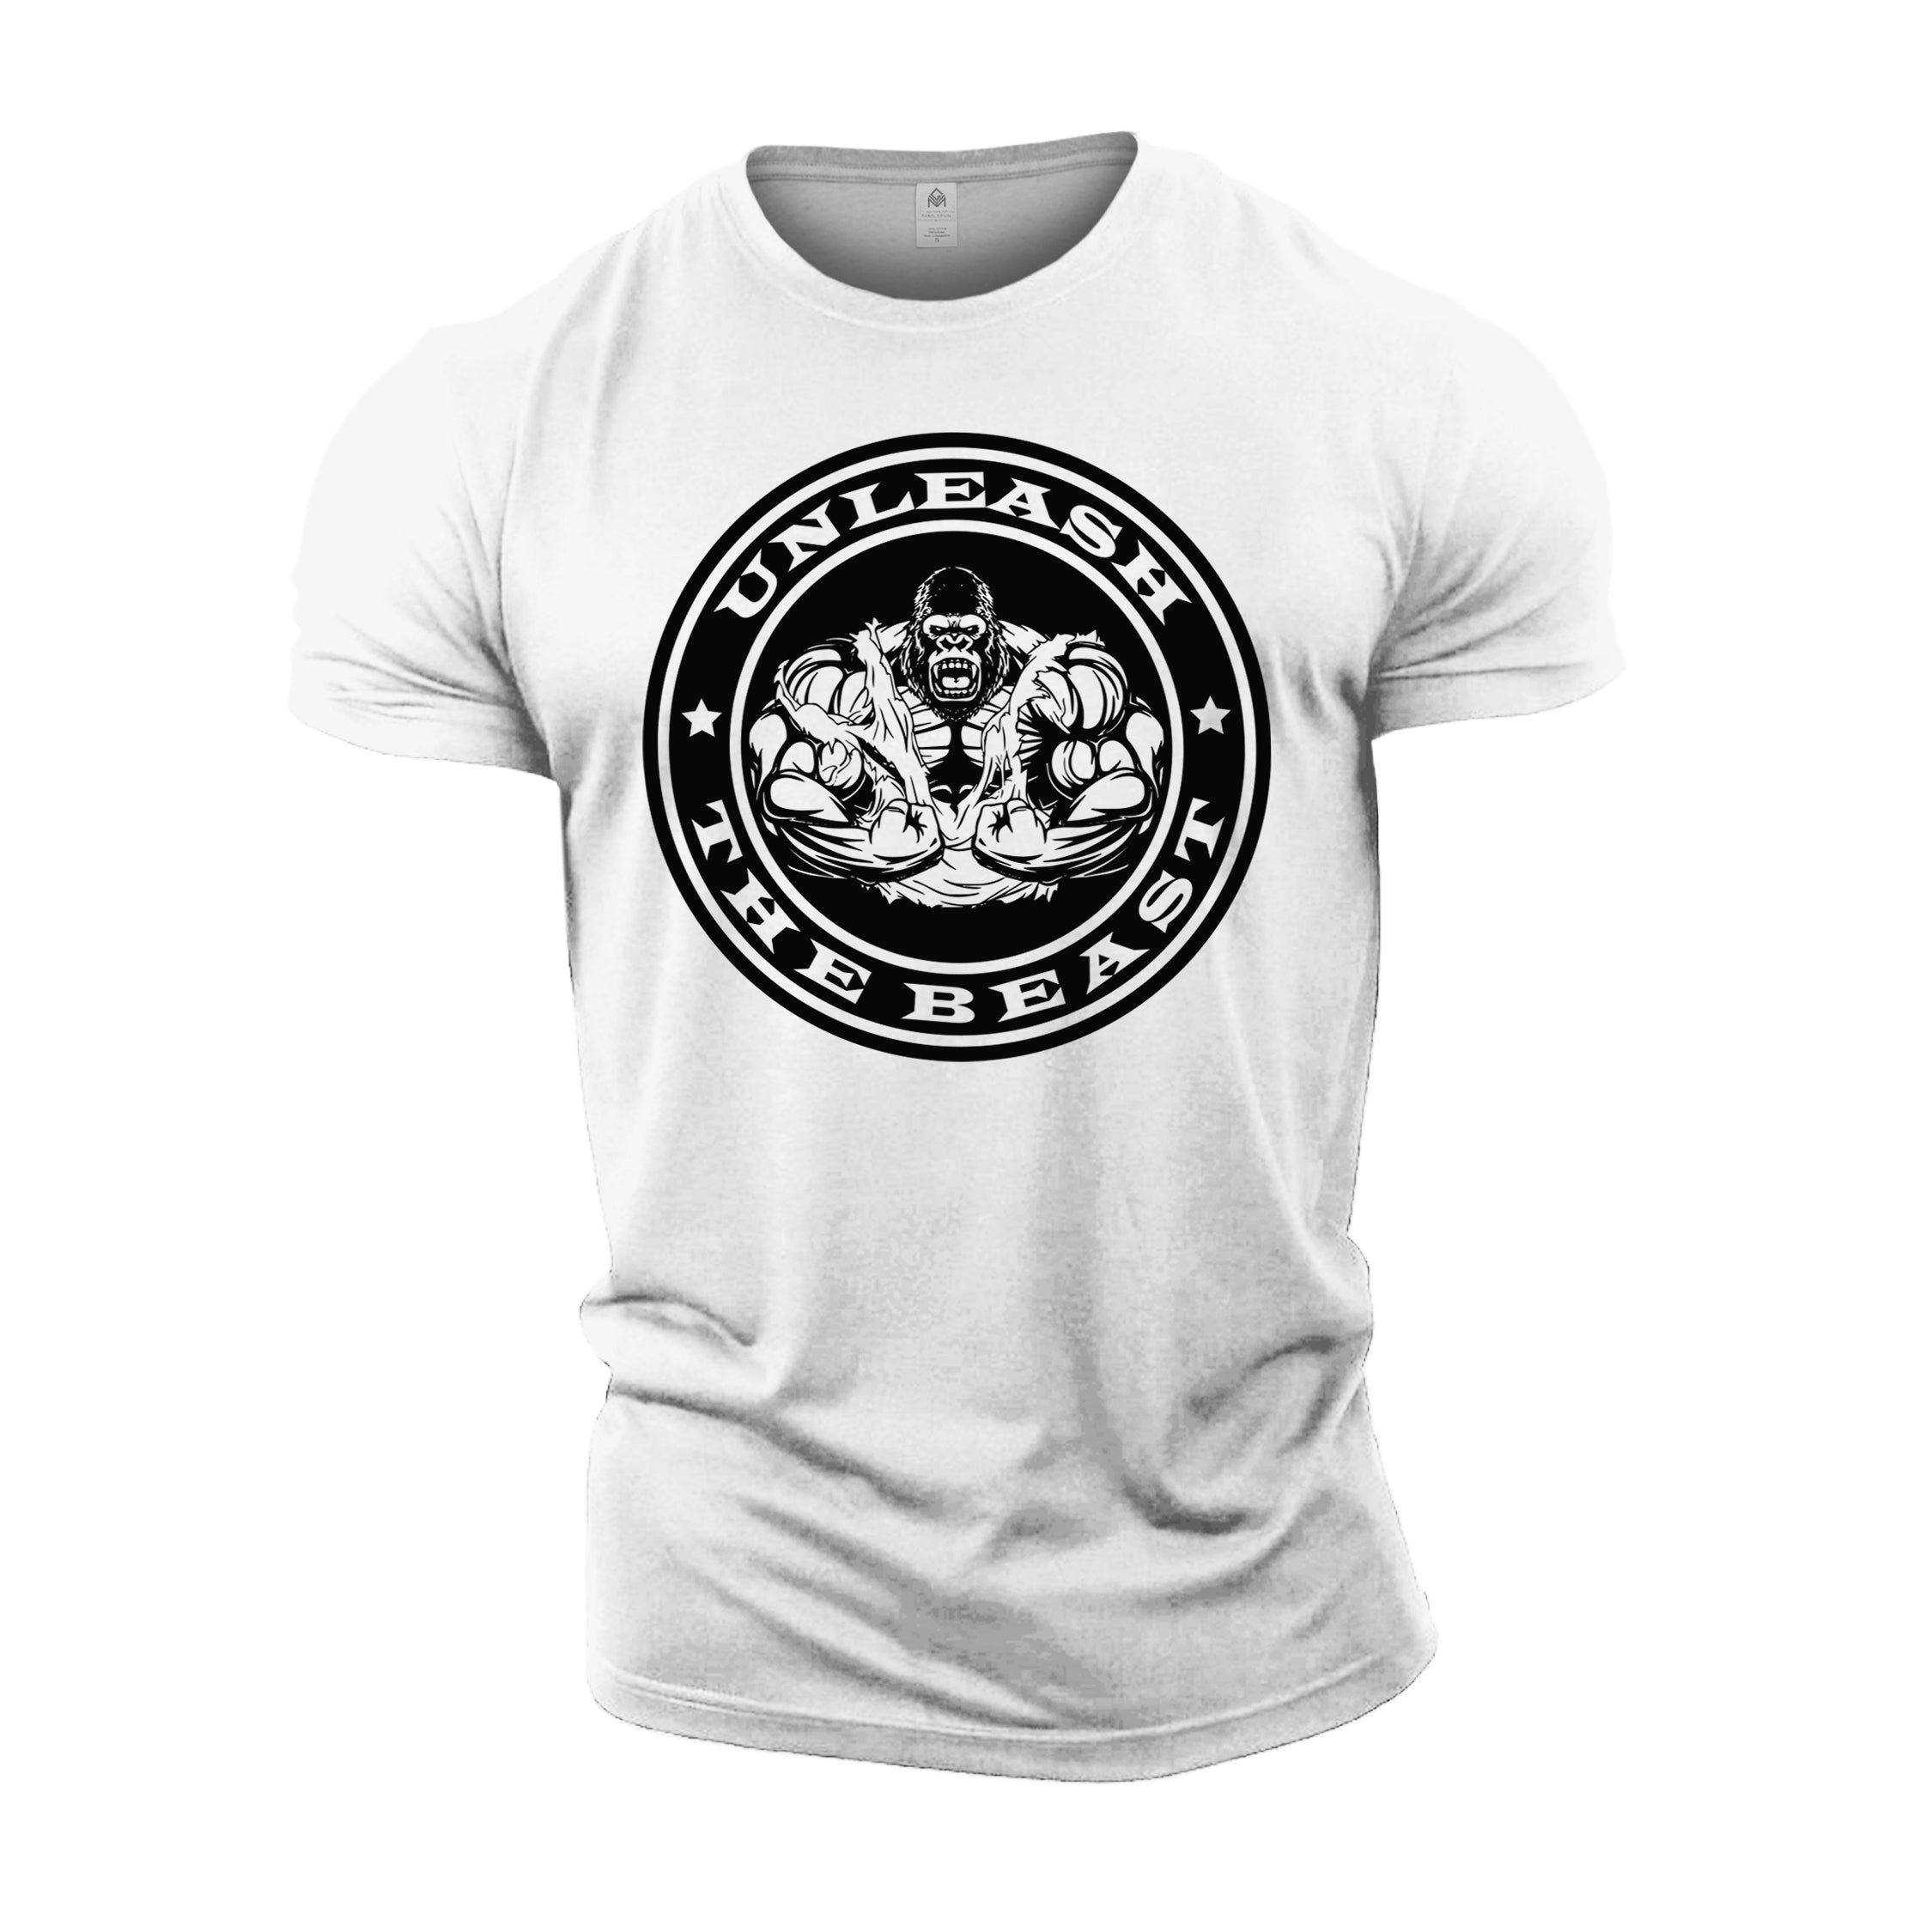 Unleash The Beast - Gym T-Shirt